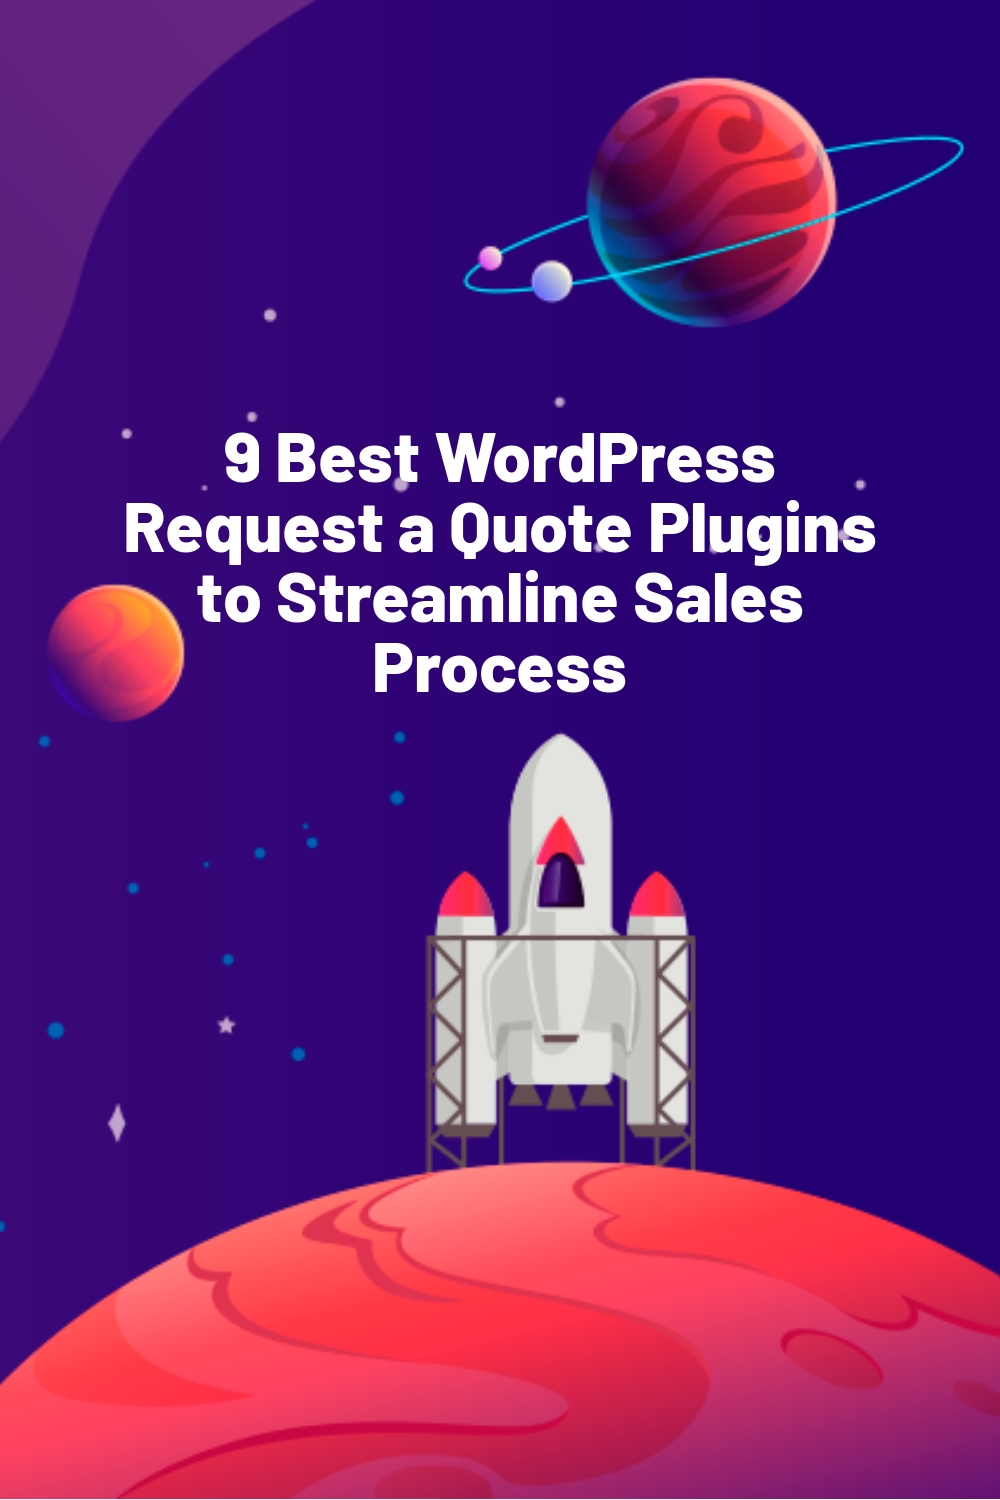 9 Best WordPress Request a Quote Plugins to Streamline Sales Process